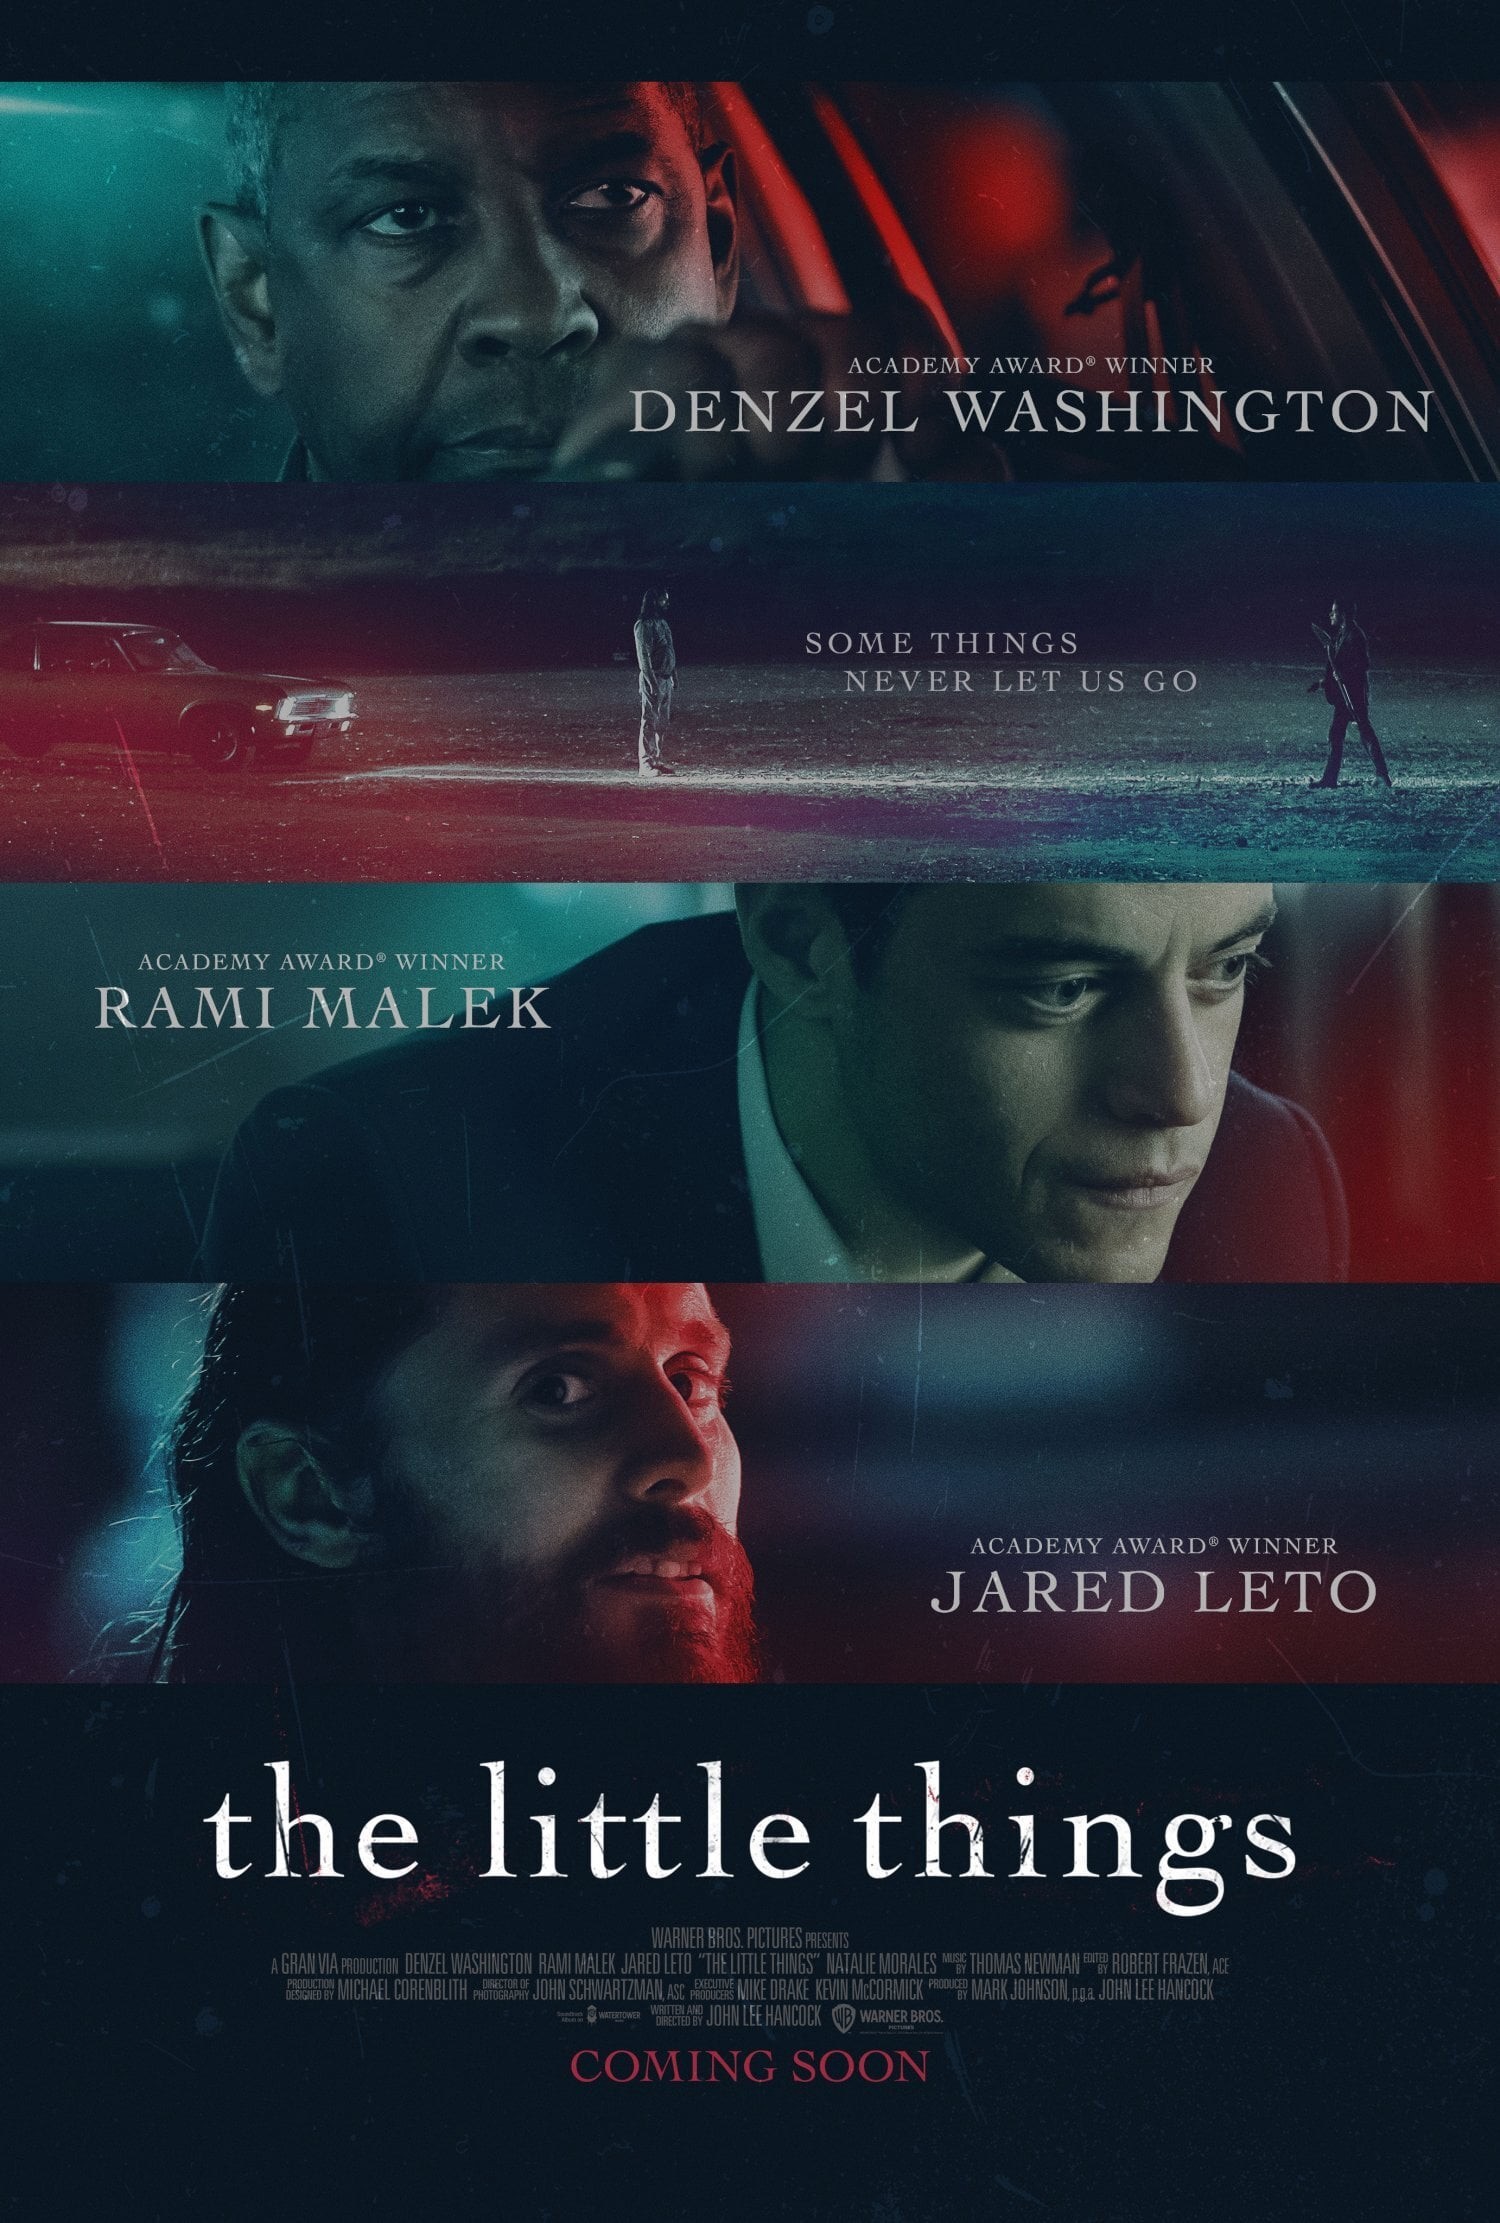 Stiahni si Filmy bez titulků Stripky / The Little Things (2021)[WebRip] = CSFD 53%